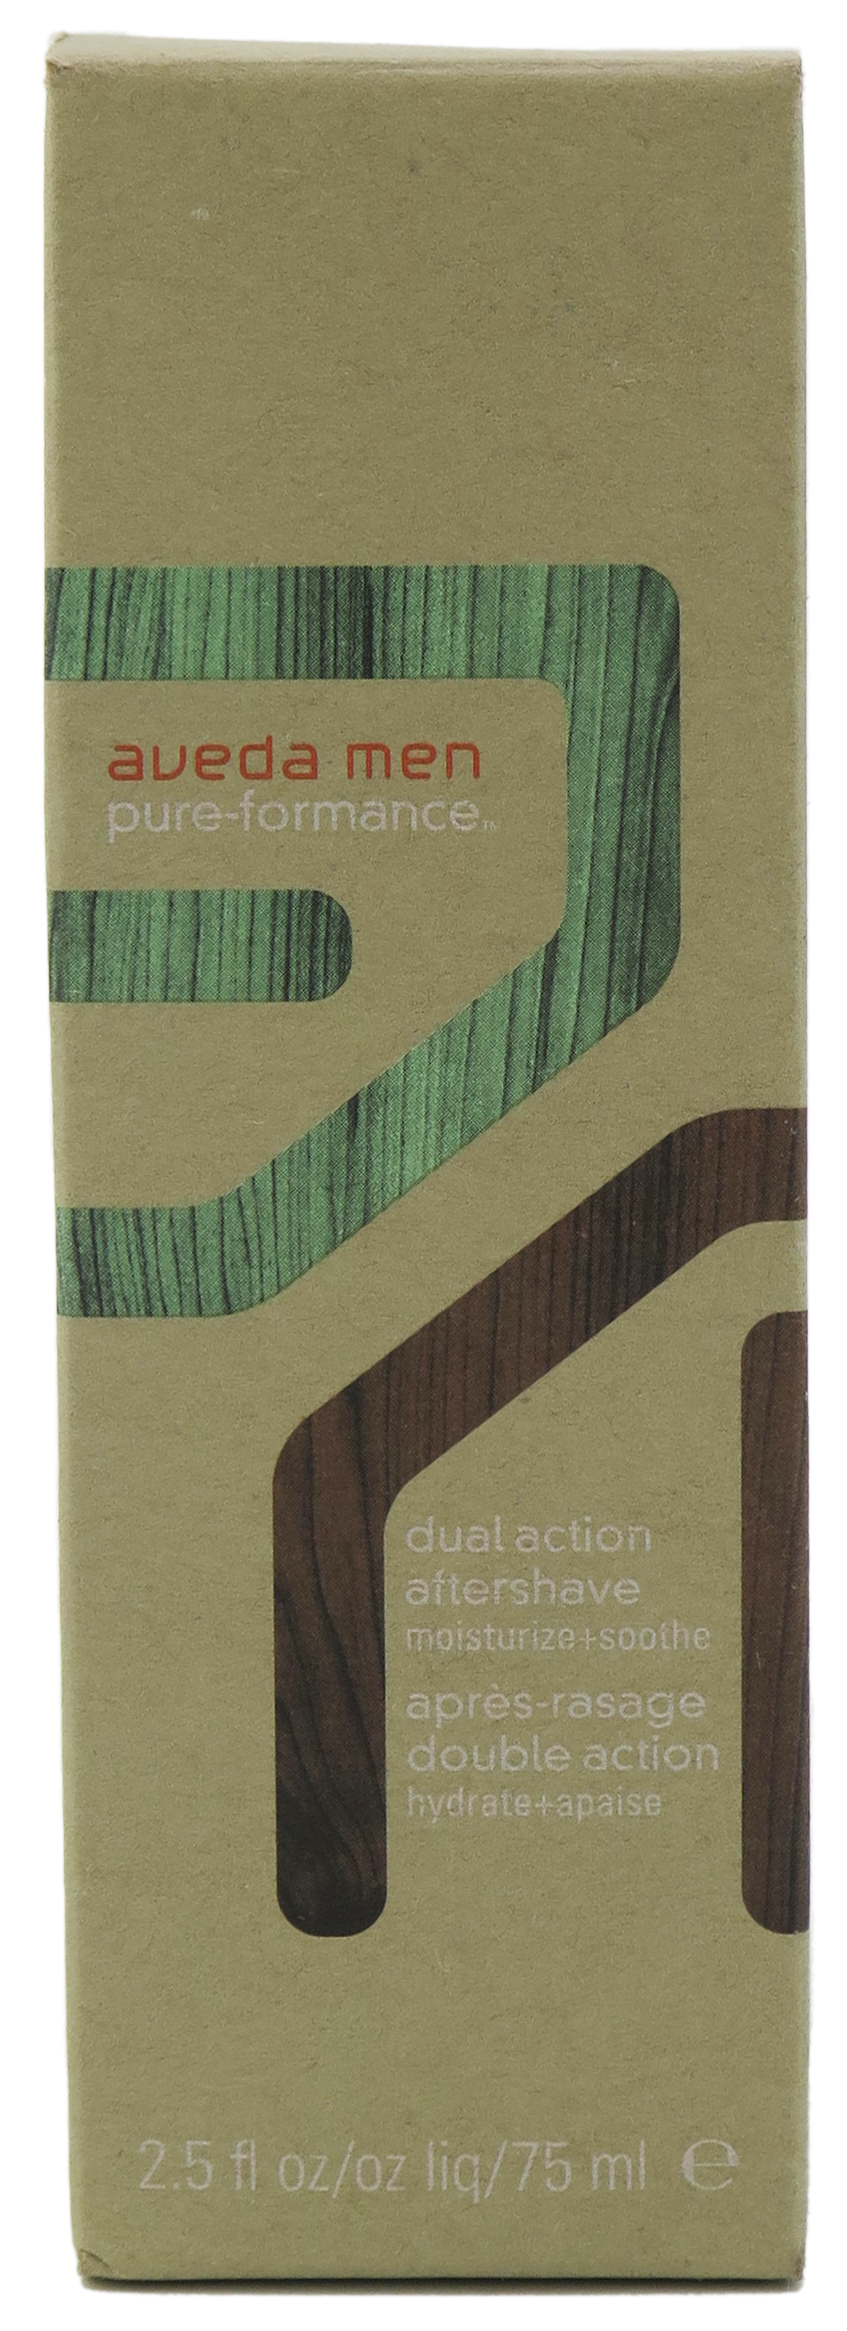 Aveda Men Pure-Formance Dual Action Aftershave 2.5 Fl oz